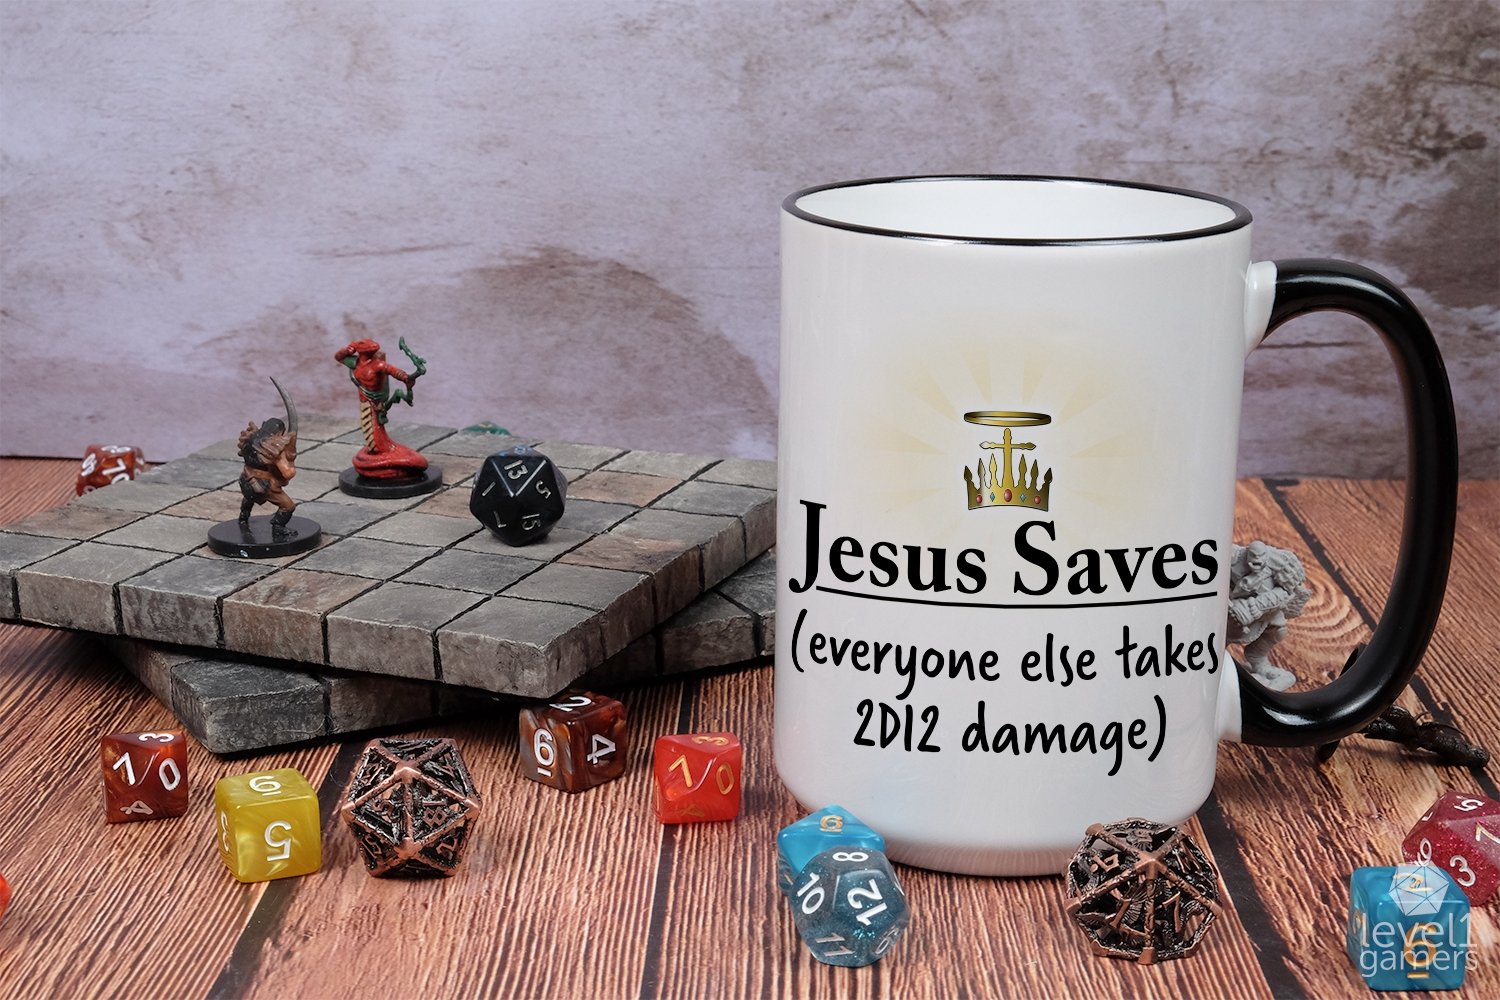 Jesus Saves Parody Mug  Level 1 Gamers   